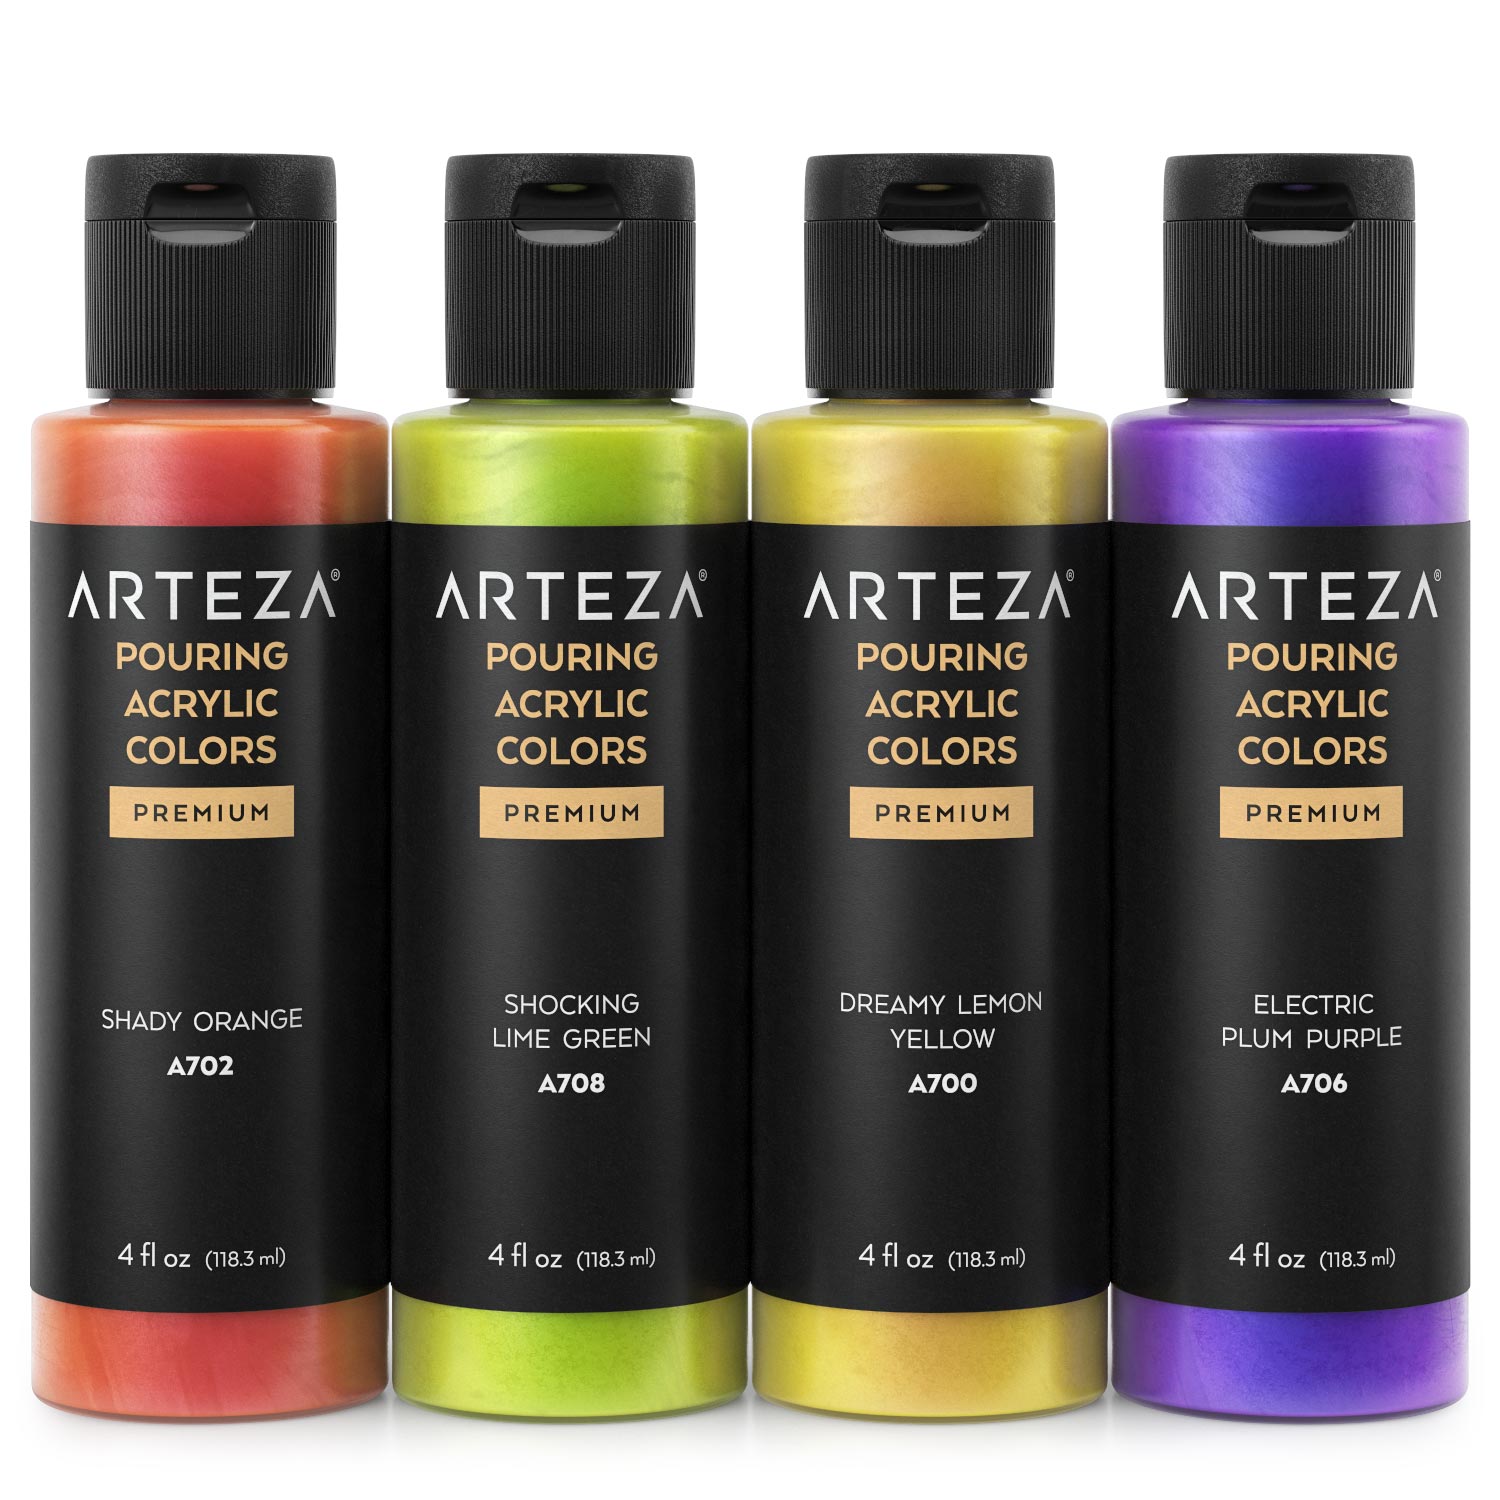 Arteza Pouring Acrylic Paints, Iridescent Sherbet Tones, 4oz Bottles - Set of 4